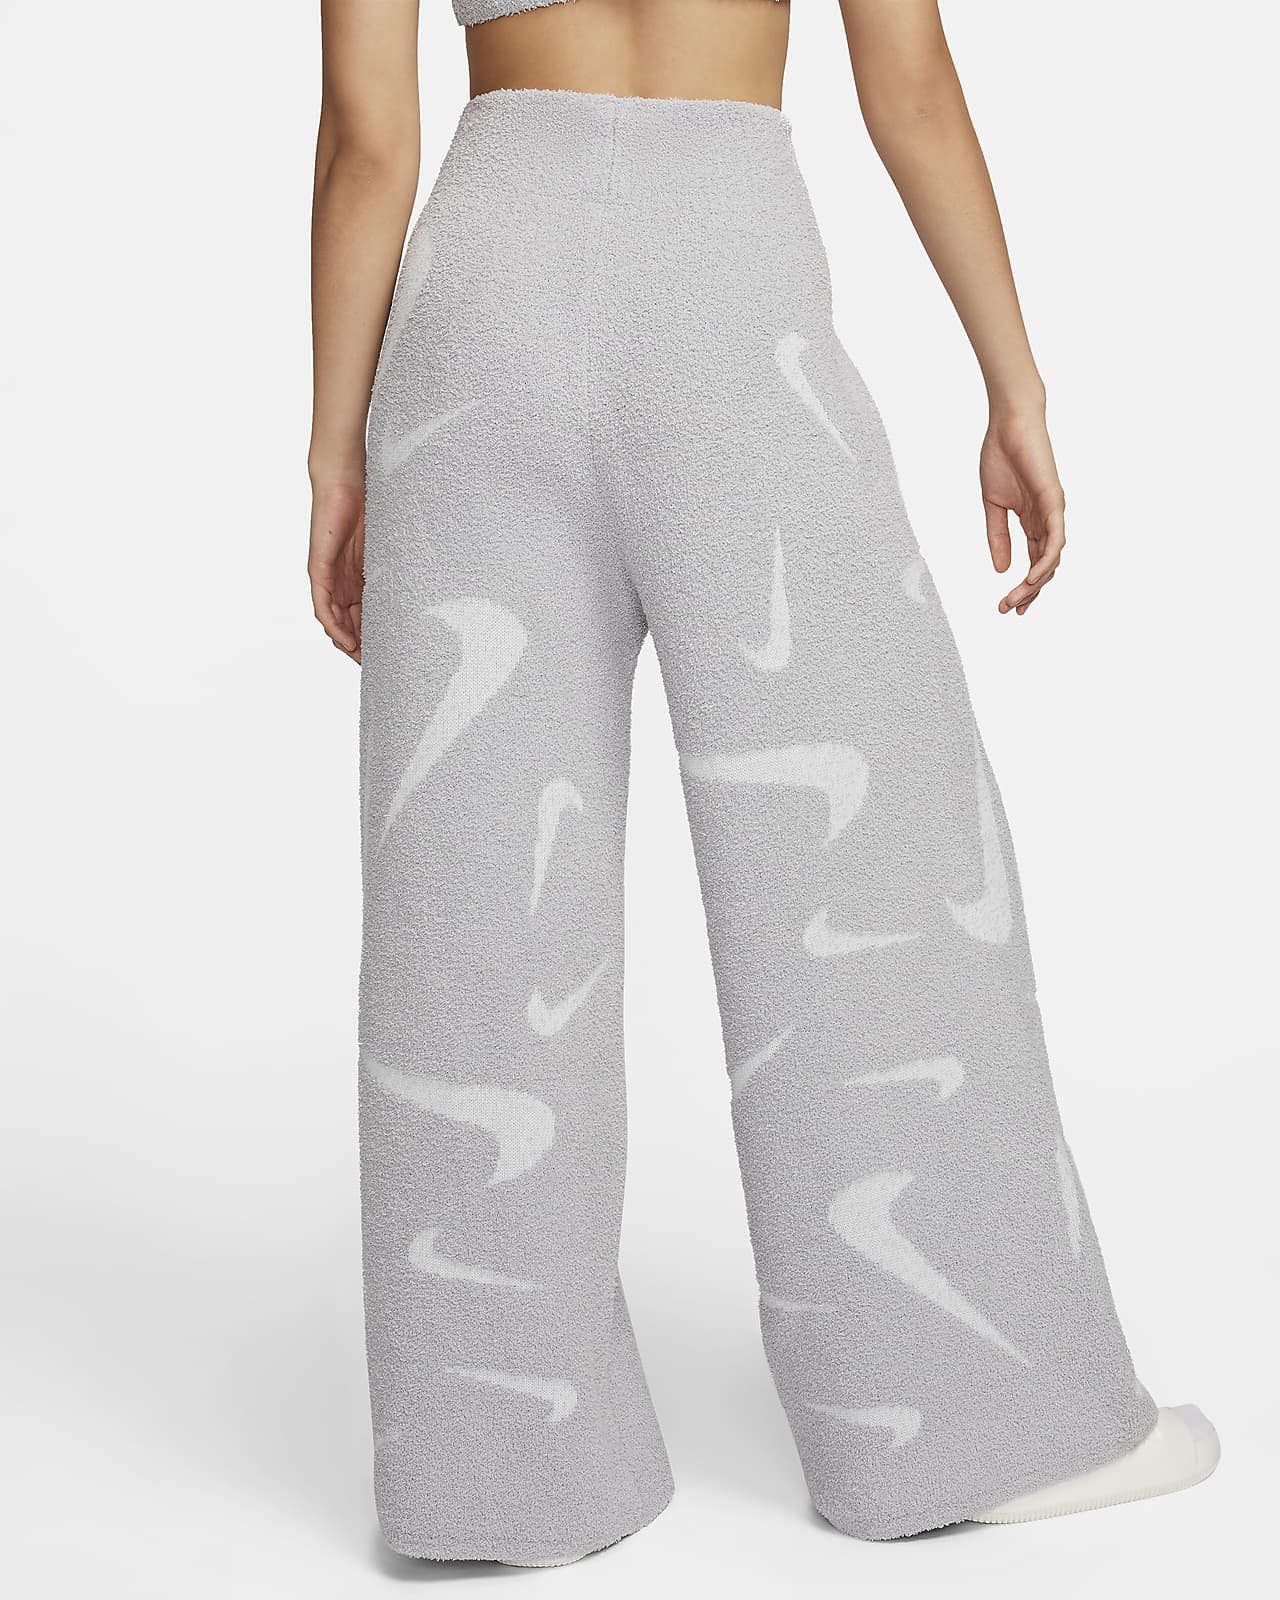 Nike Willowbrook Pants - Women's